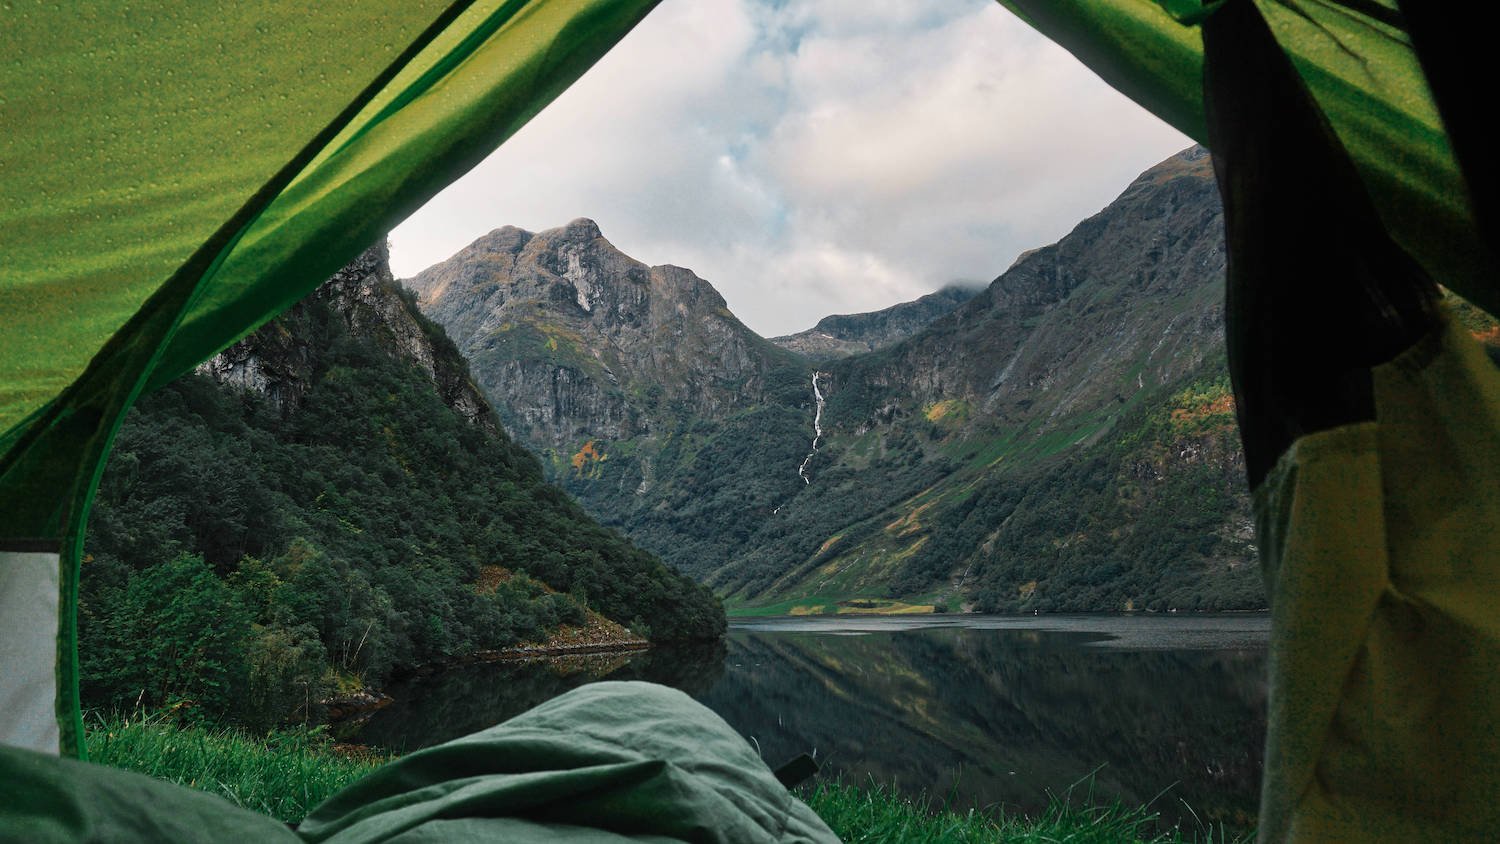 Naeroyfjord Odnes Camping Tent